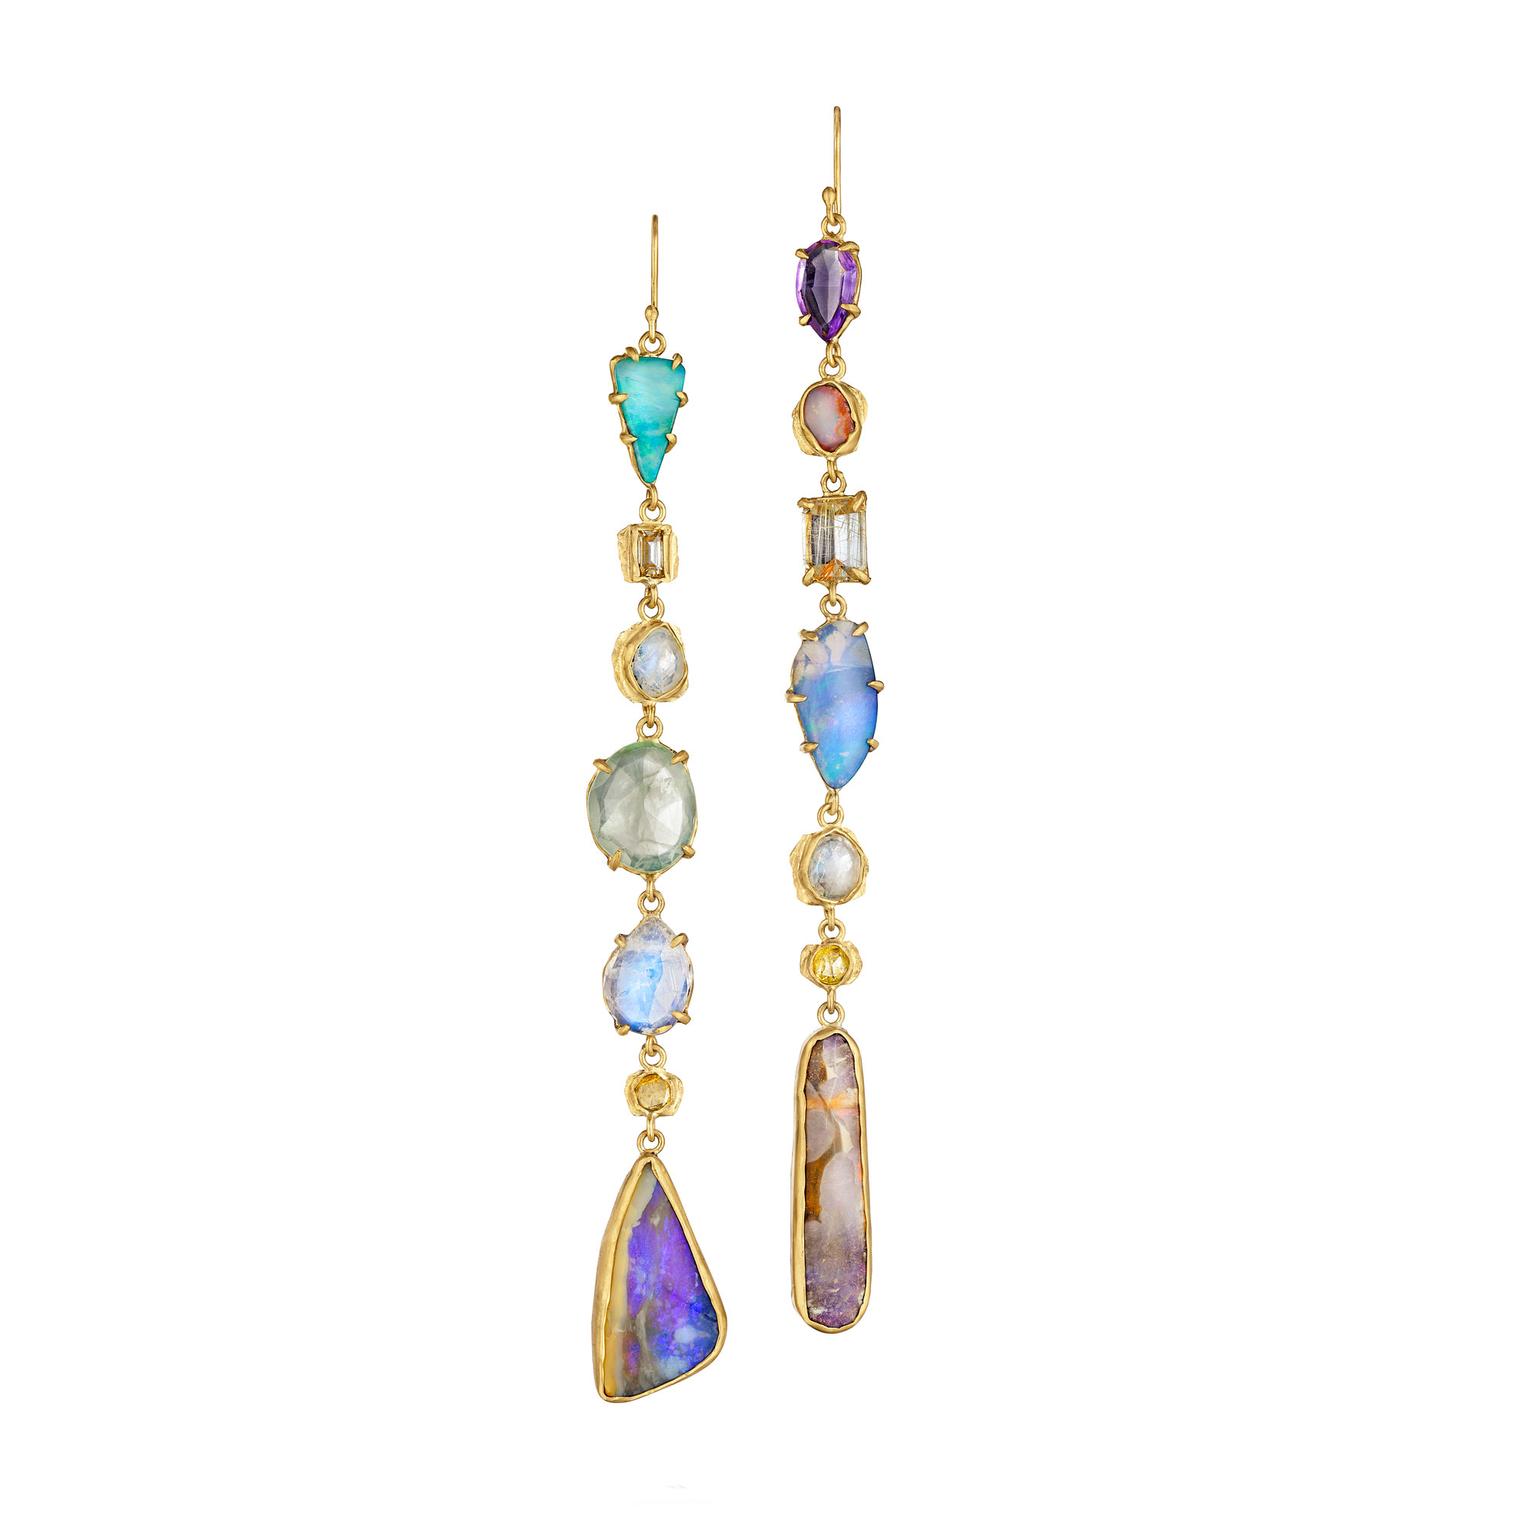 Margery Hirschey coloured gemstone earrings